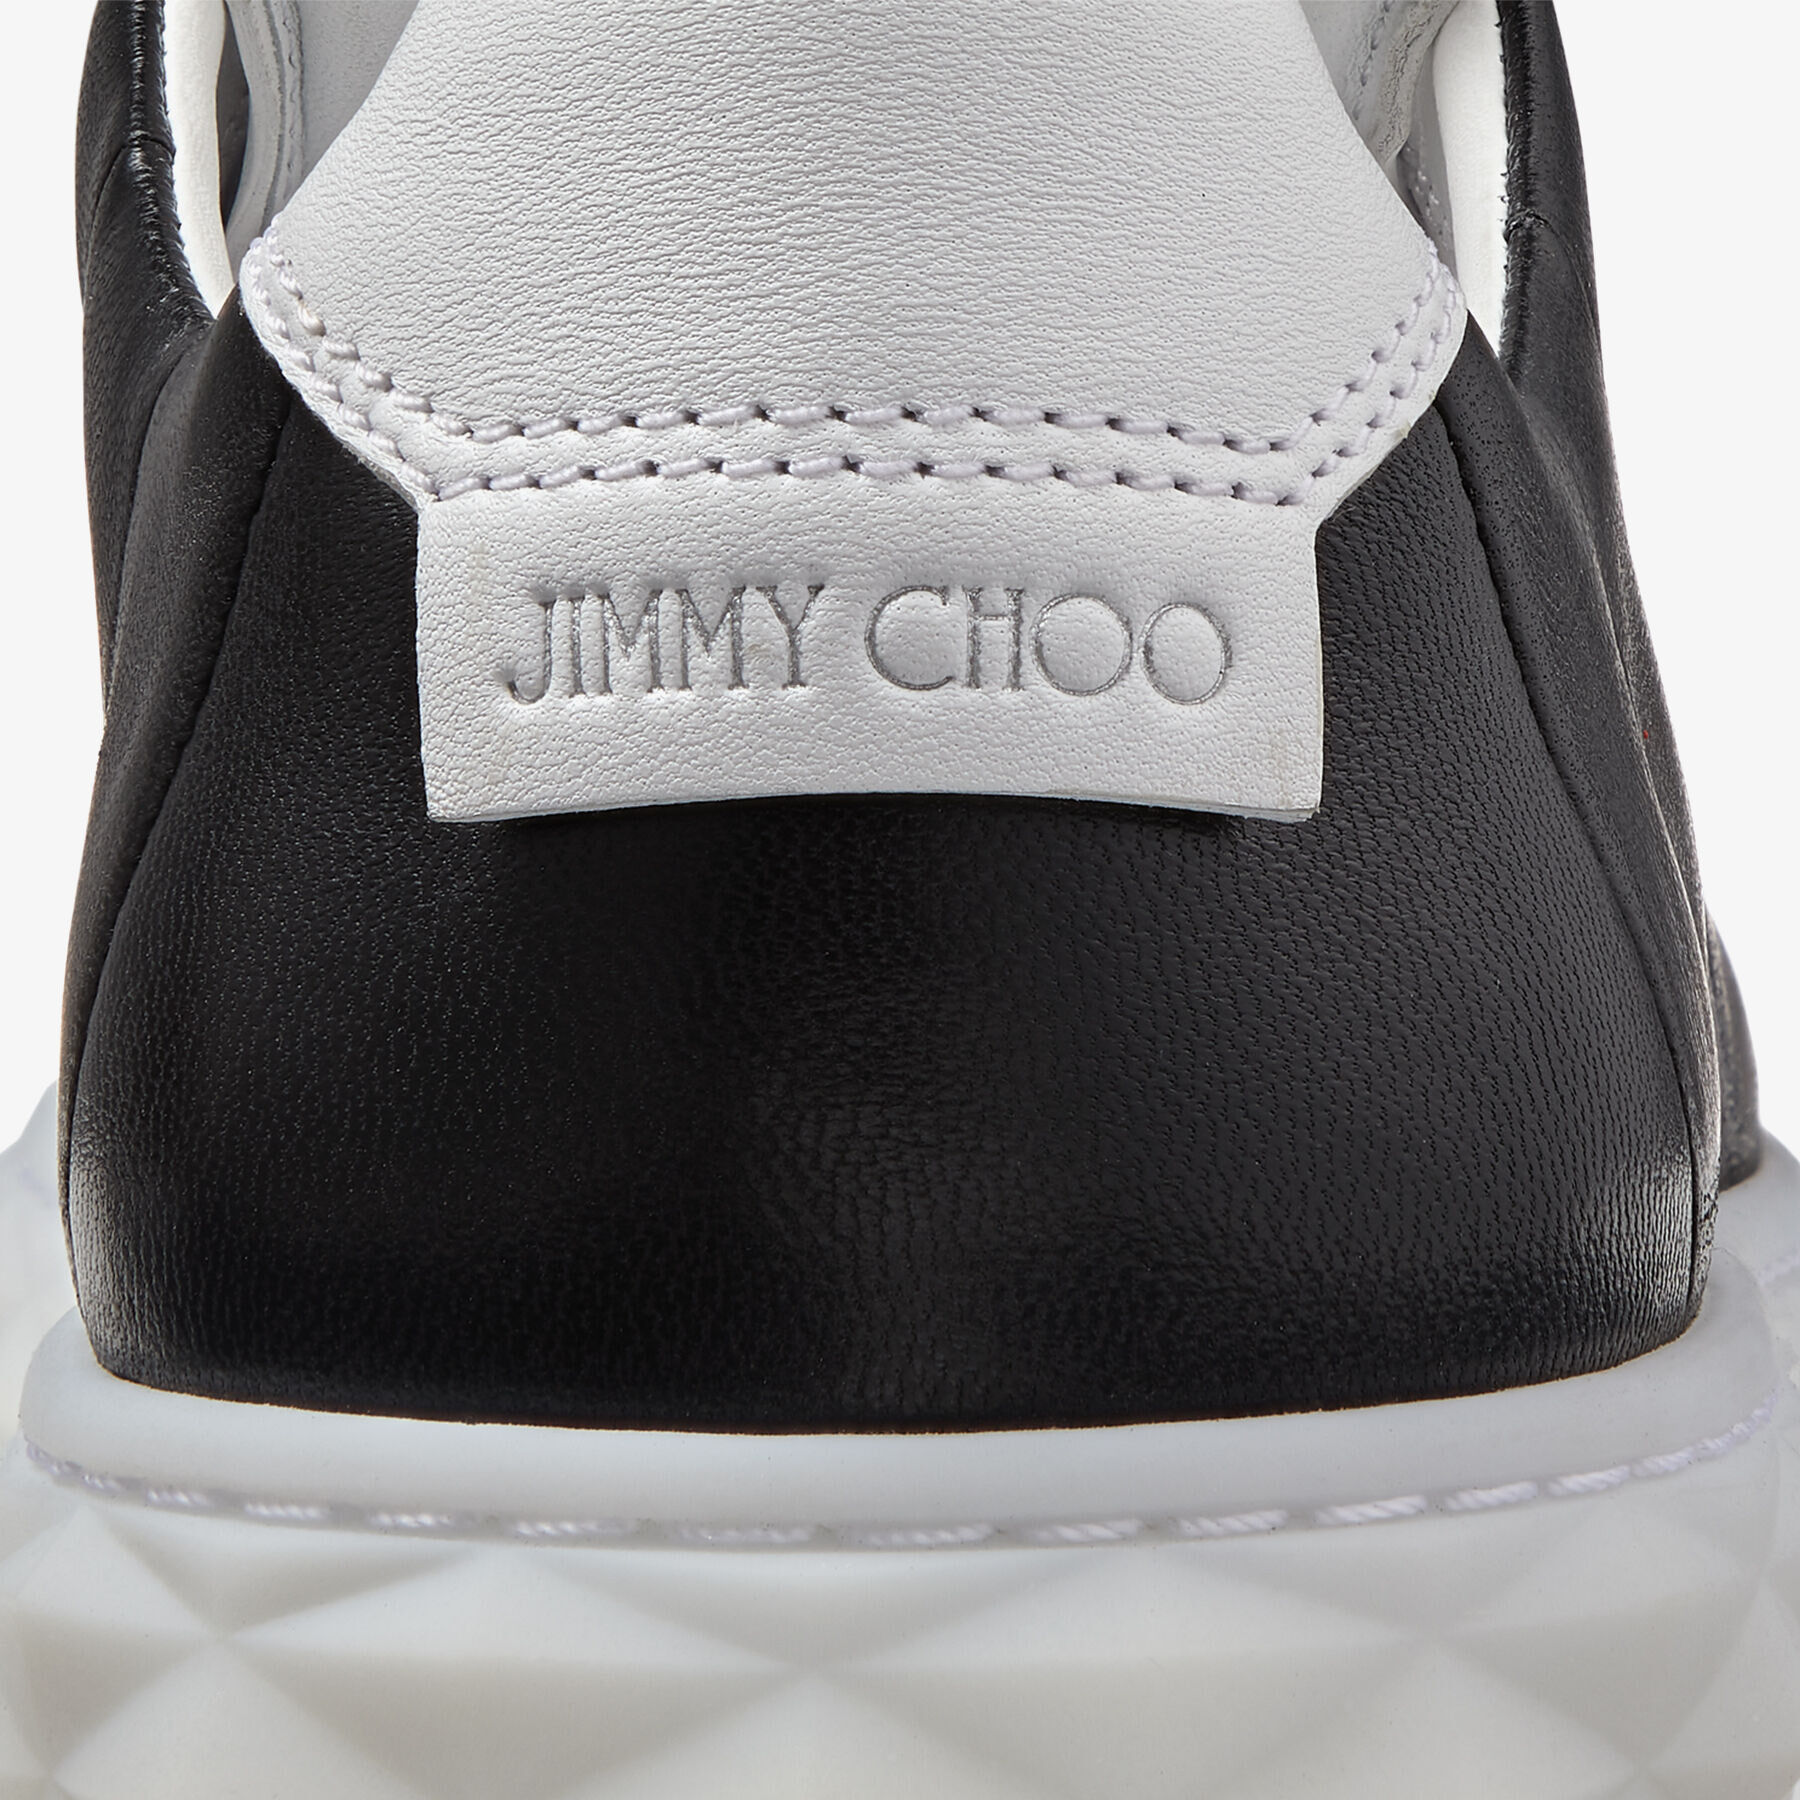 Jimmy Choo Diamond Light/F